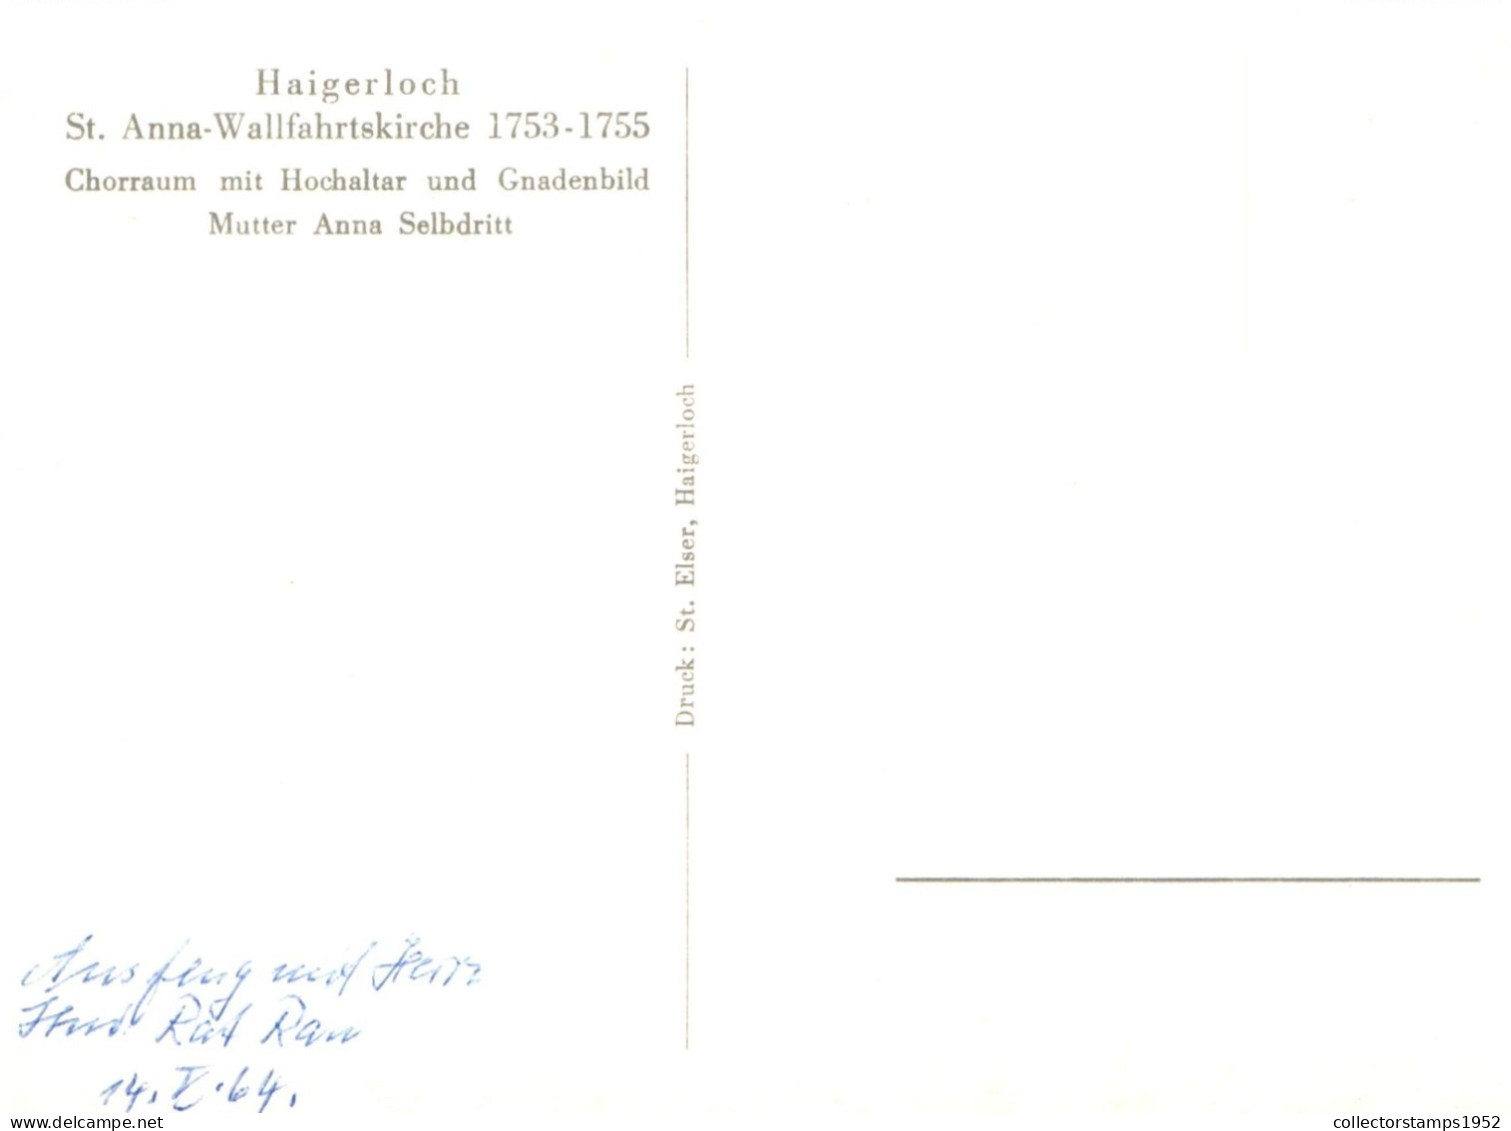 GERMANY, BADEN WURTTEMBERG, HAIGERLOCH, ST. ANNA WALLFAHRTSKIRCHE, CHURCH - Haigerloch